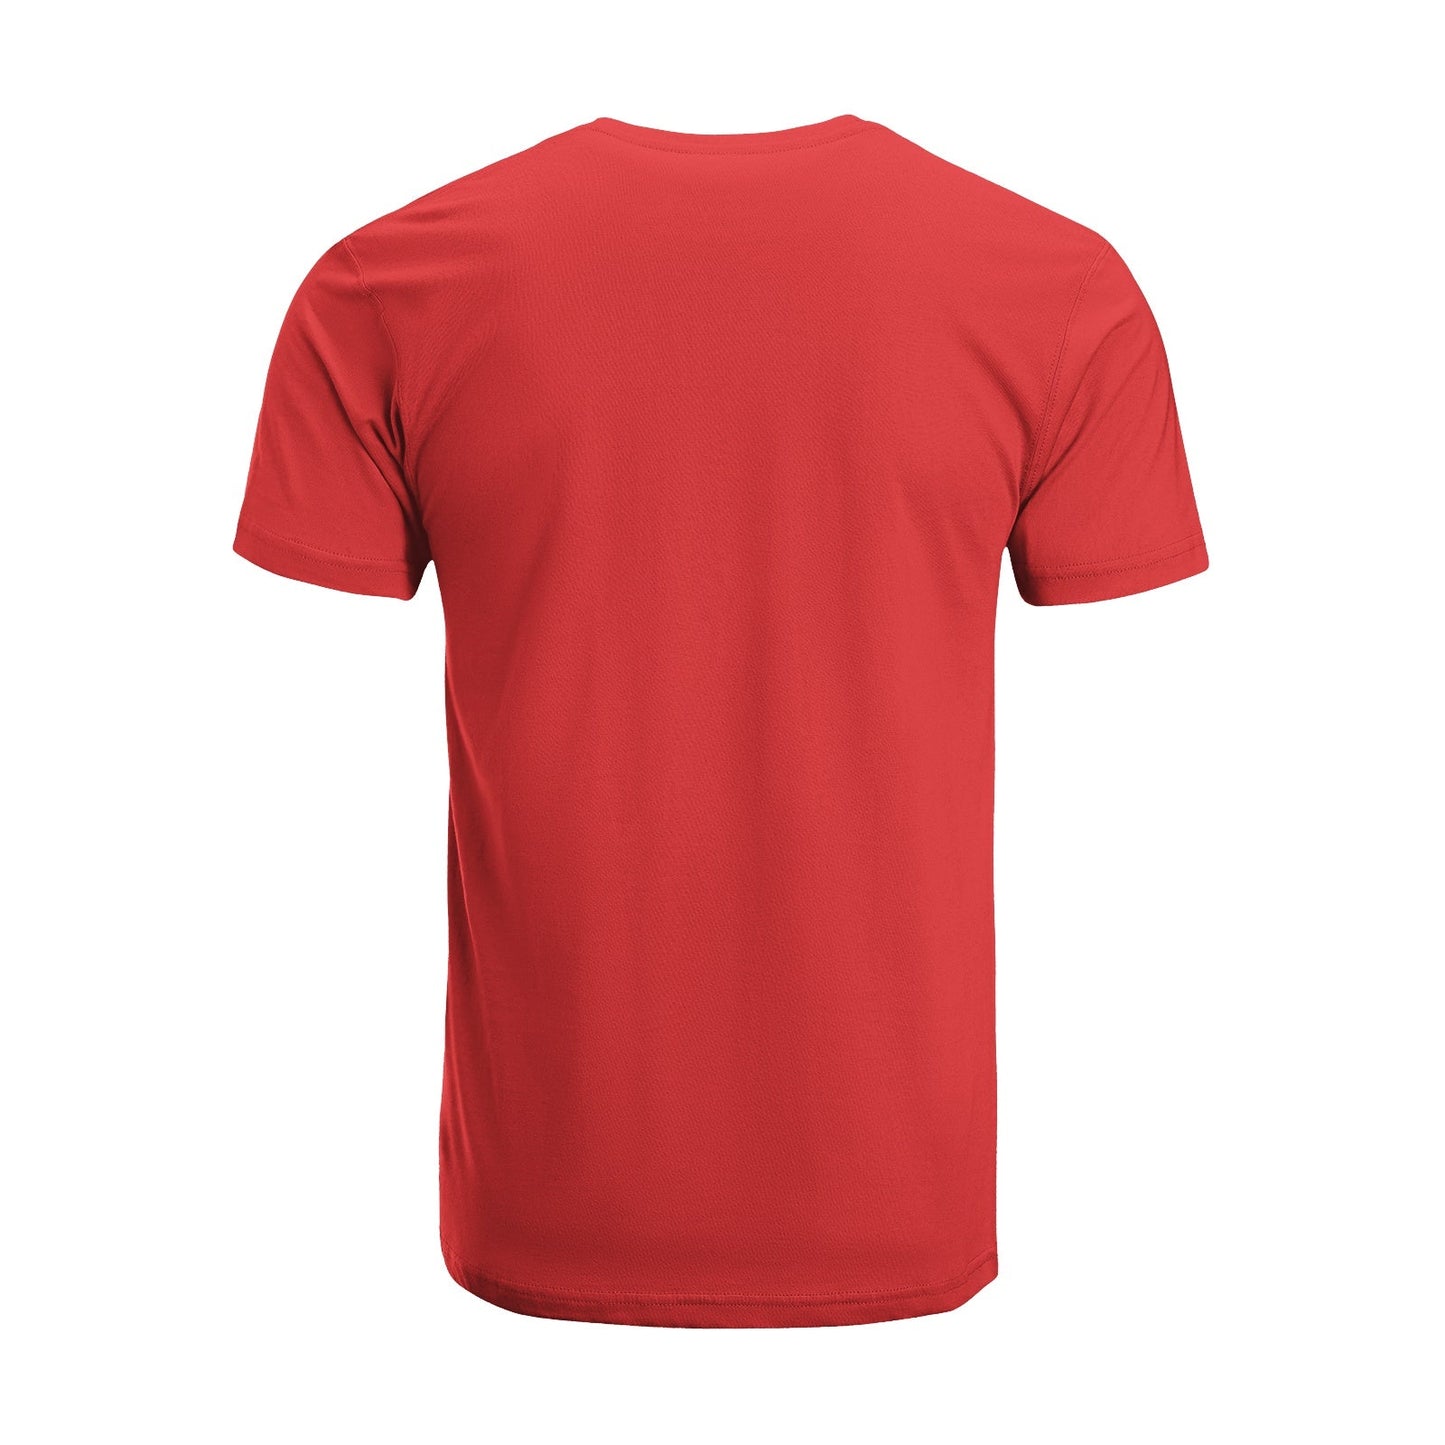 Unisex Short Sleeve Crew Neck Cotton Jersey T-Shirt Gym No. 29 - Tara-Outfits.com